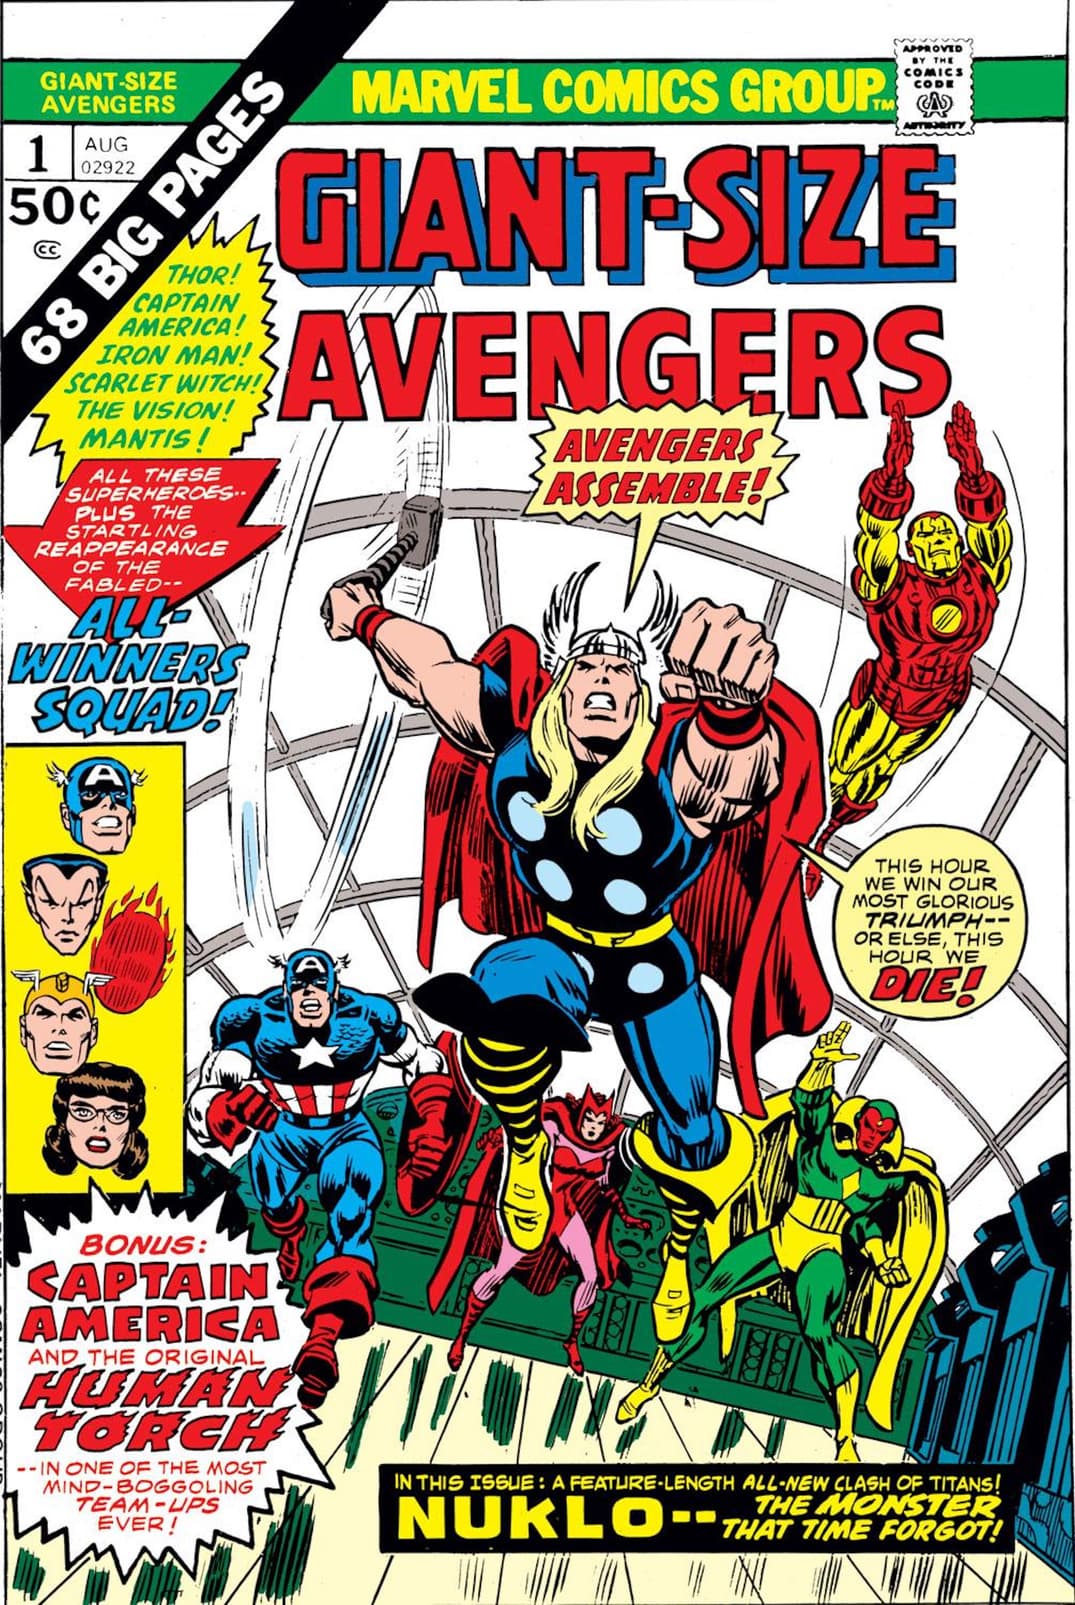 Giant-Size Avengers (1974) #1